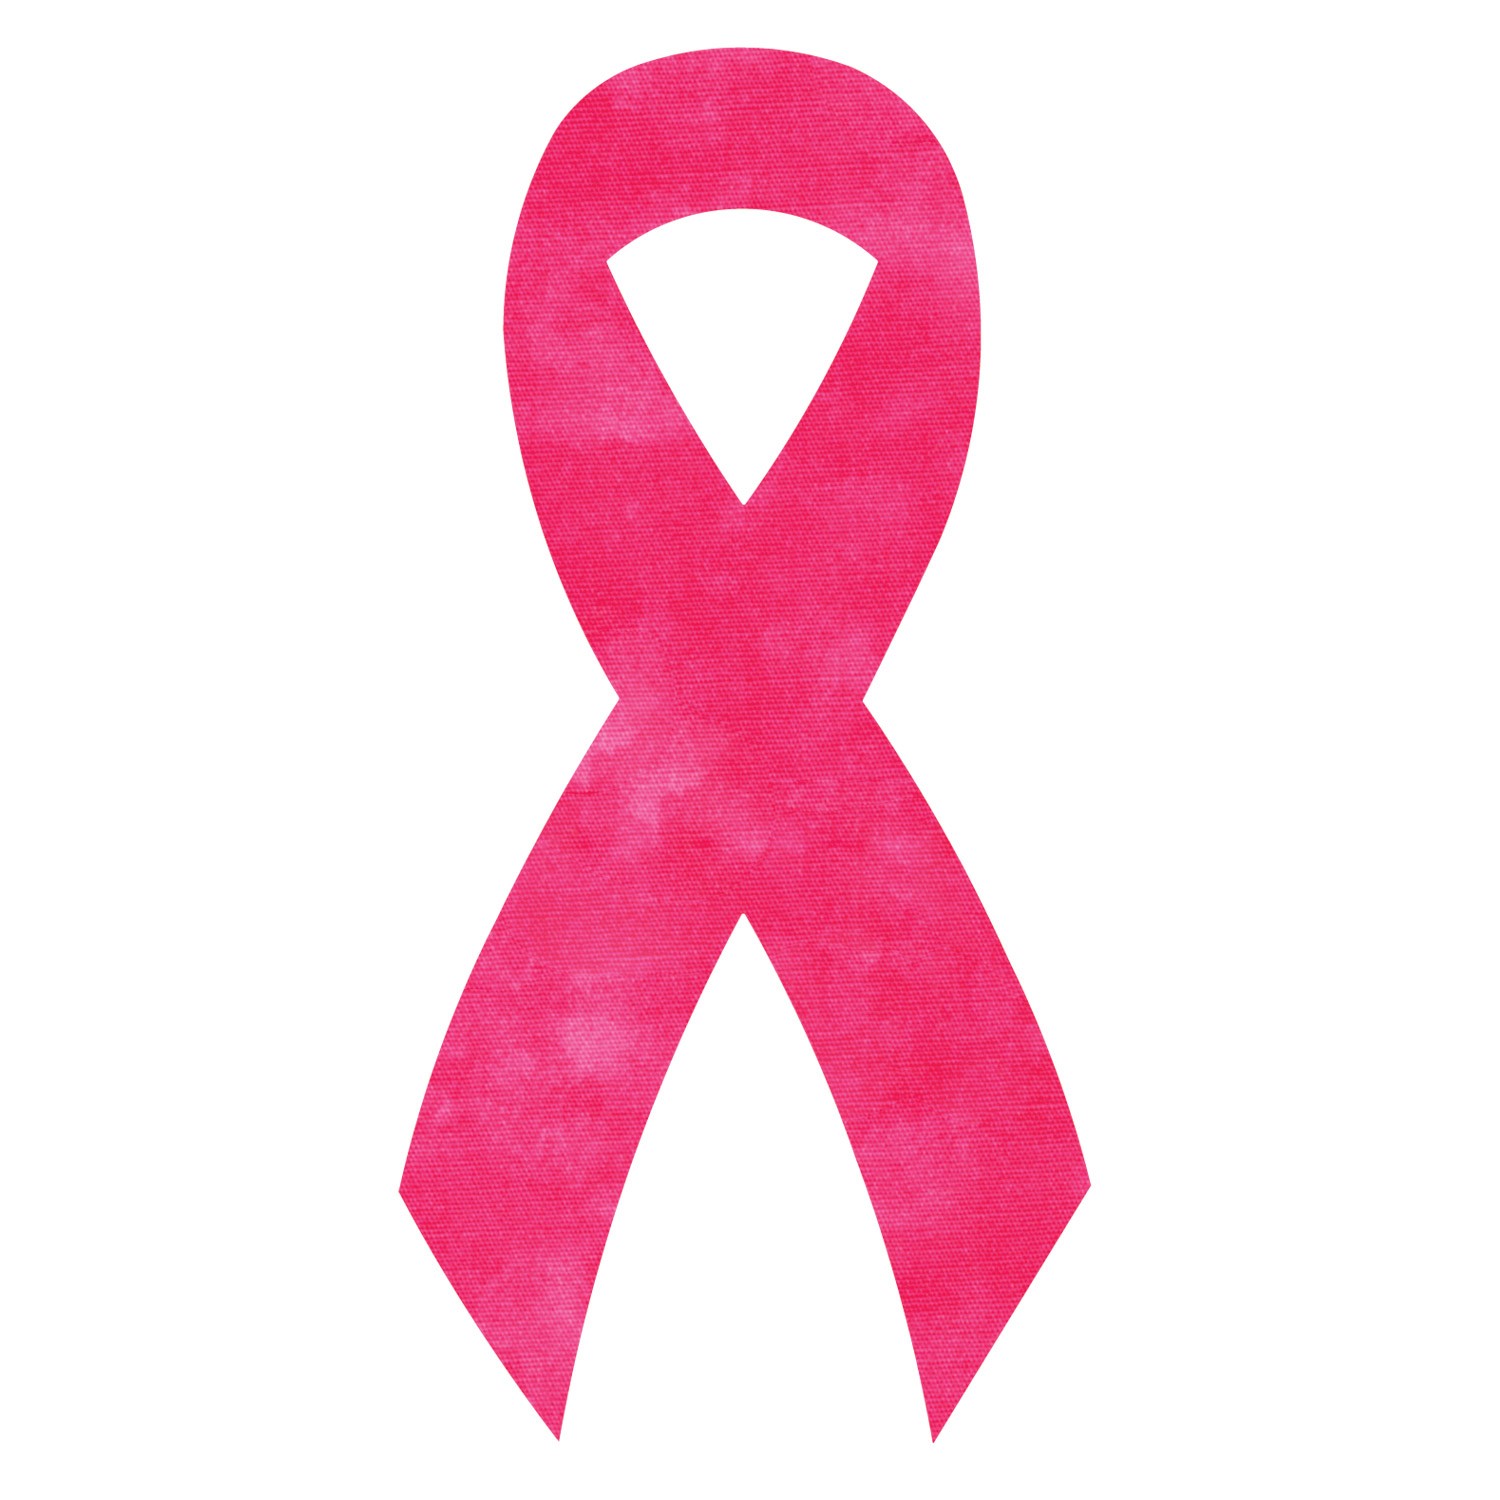 breast cancer logo clip art free - photo #23